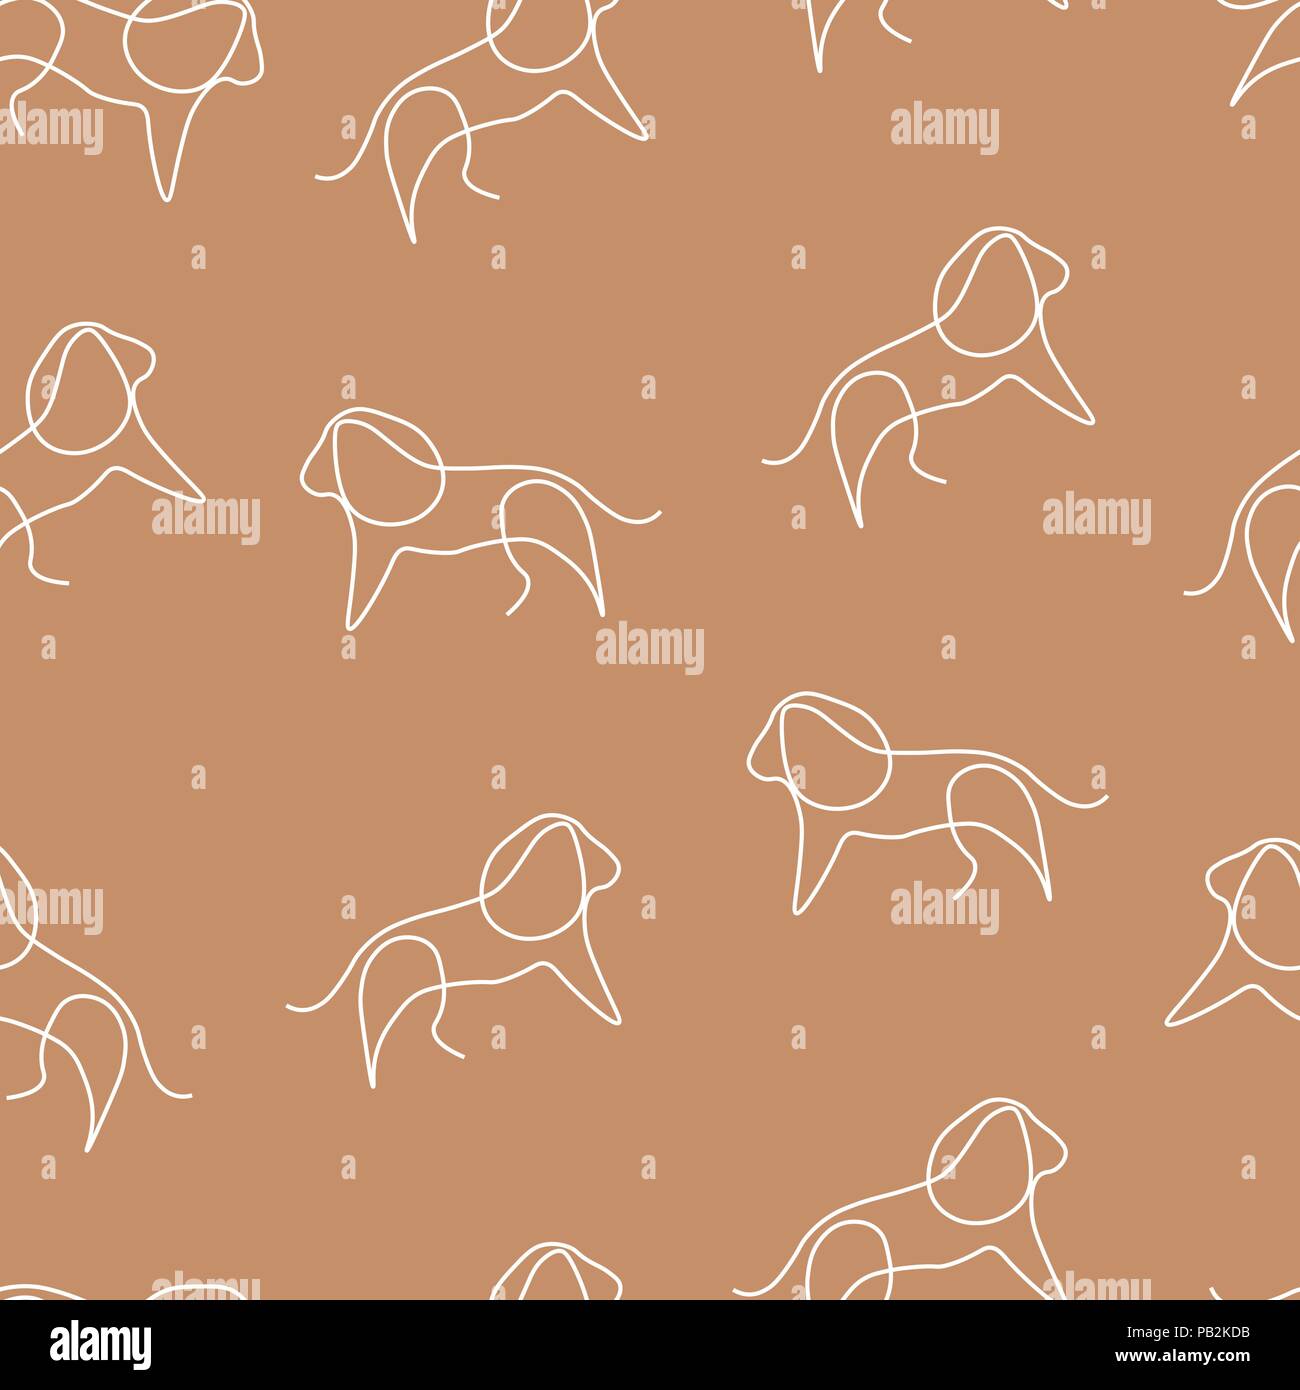 Lion animal pattern seamless. Vector illustration. Butterum background. Stock Vector